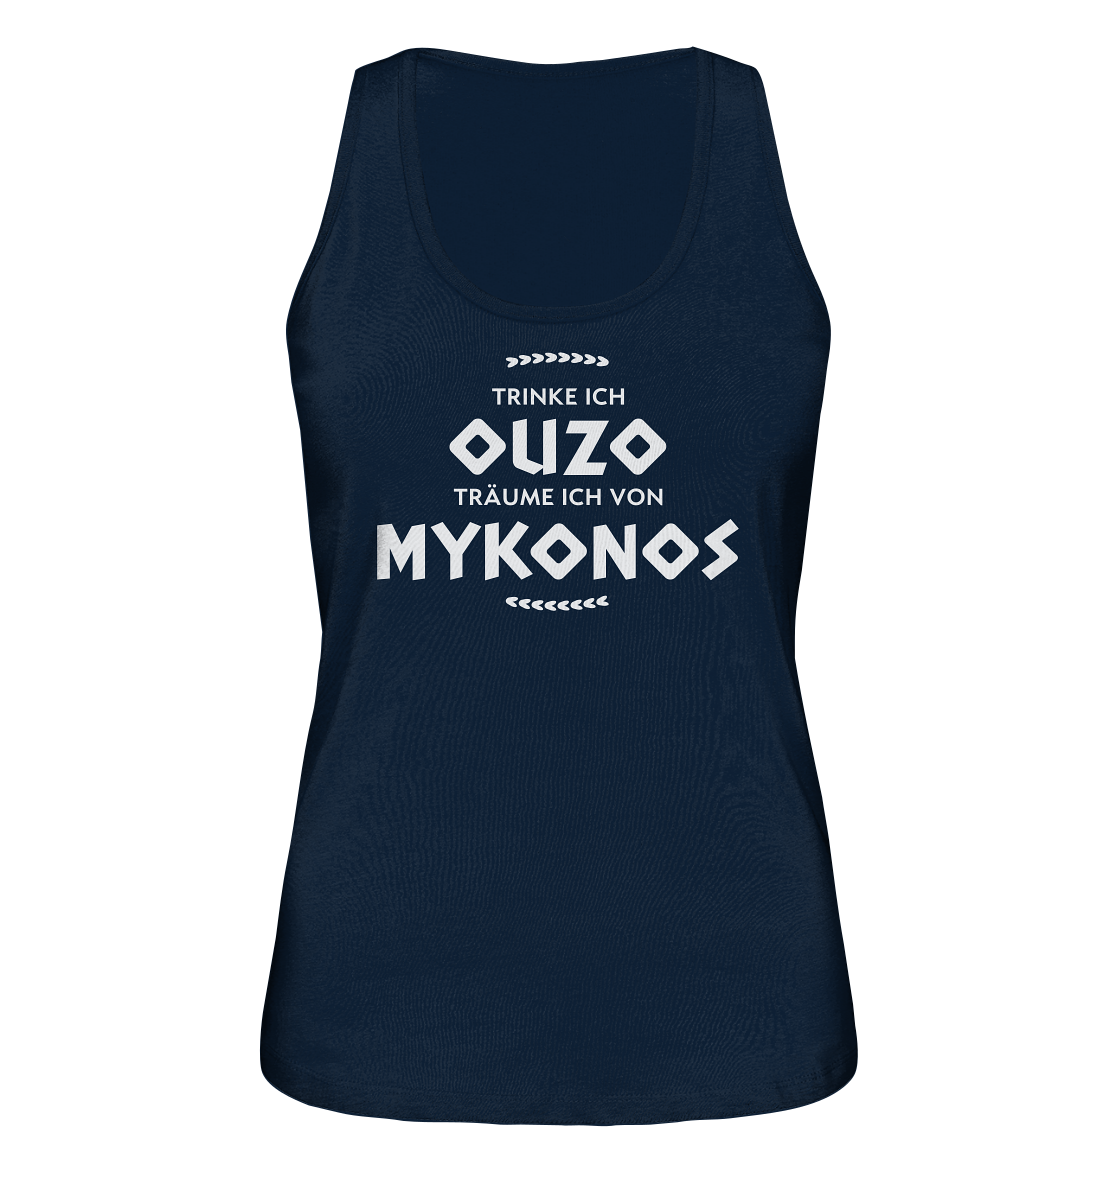 When I drink Ouzo I dream of Mykonos - Ladies Organic Tank Top